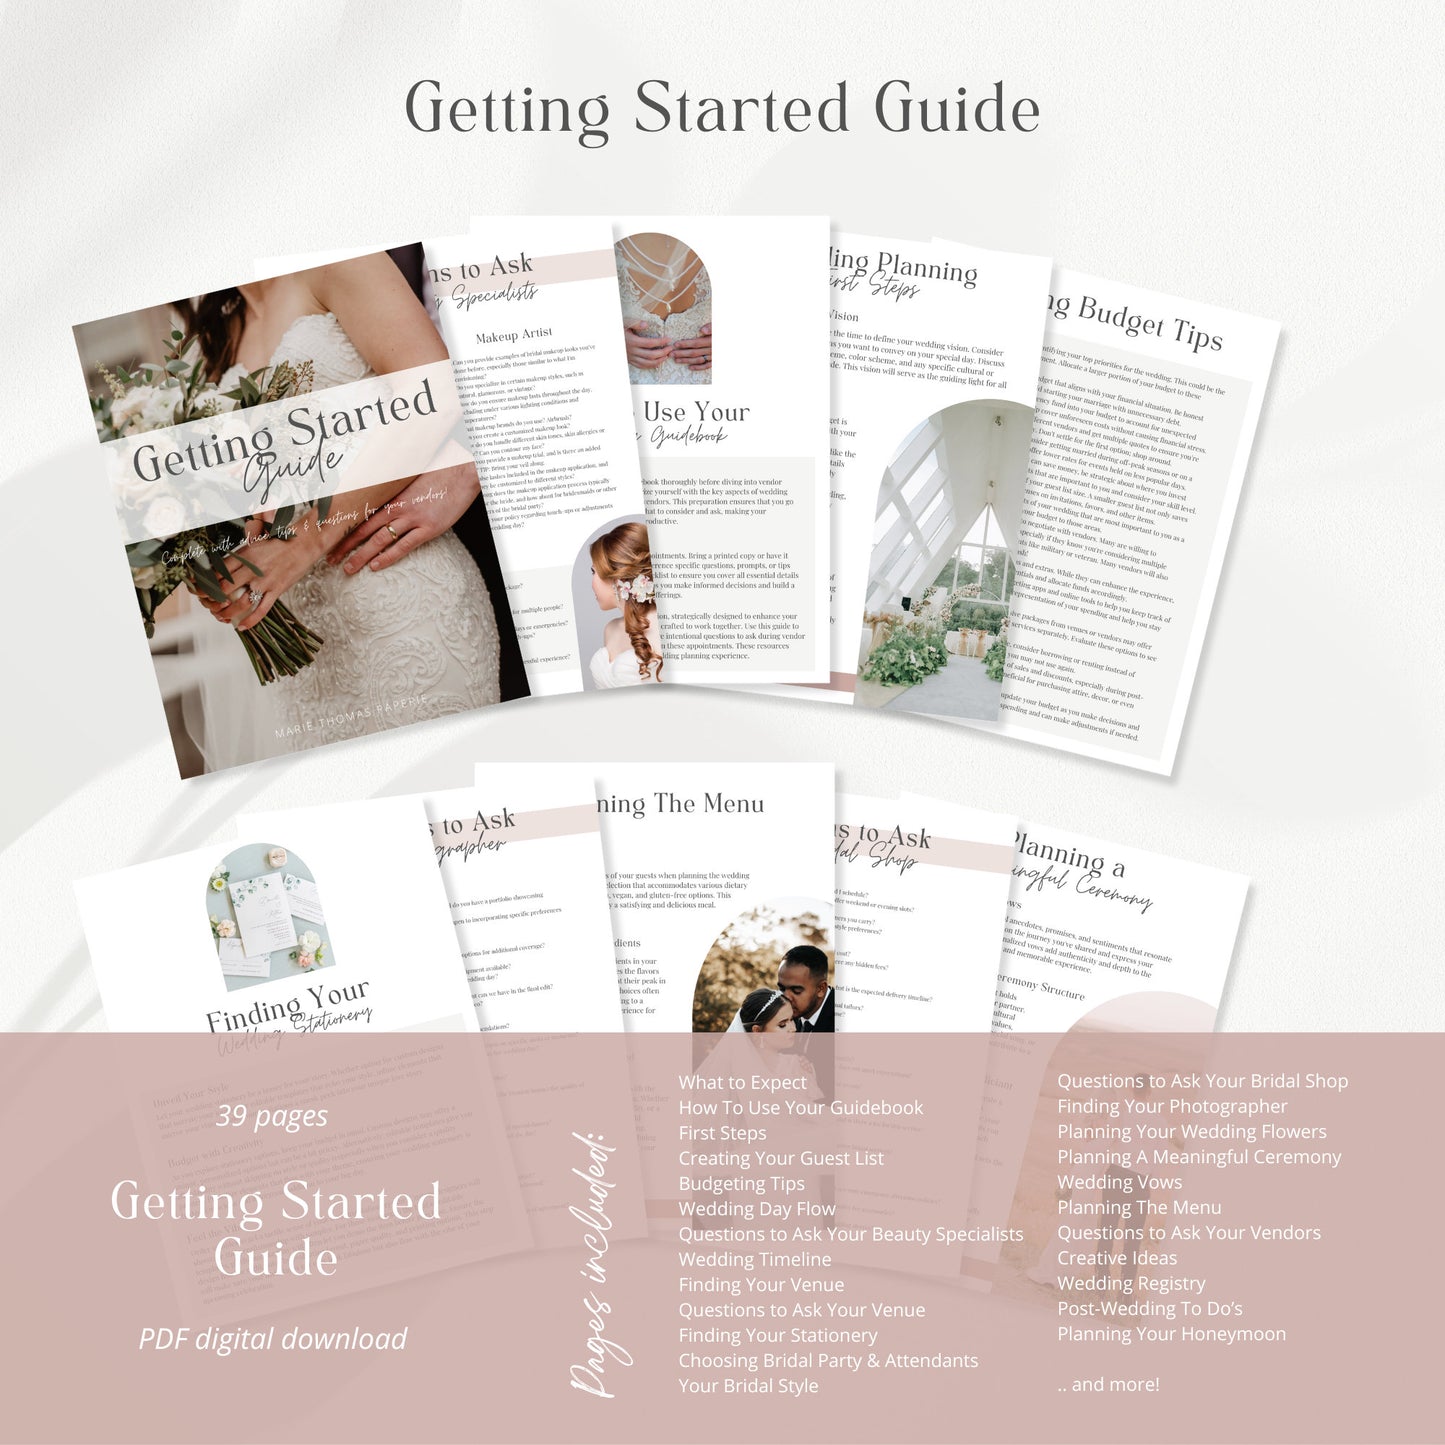 Editable 200+ Page Canva Wedding Planner Bundle Wedding Planning Book Wedding Checklist Binder Wedding Planner Template